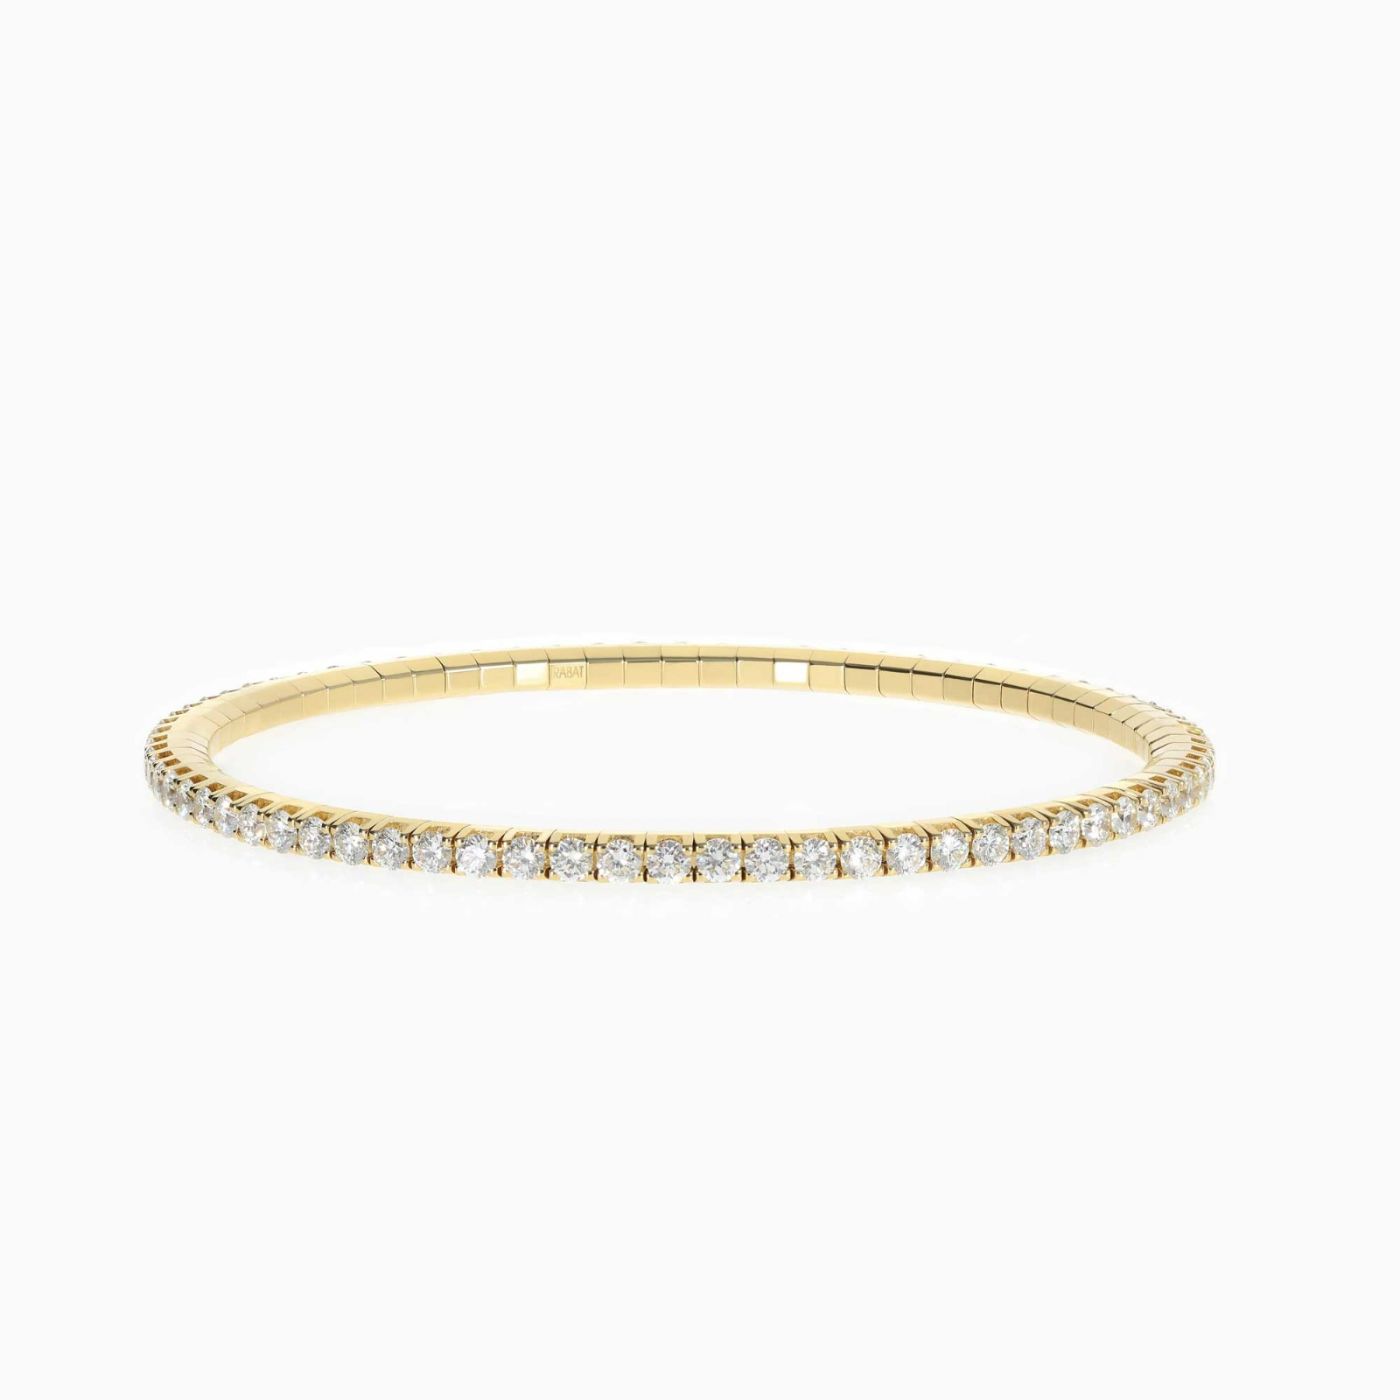 Yellow gold riviere bracelet with brilliant-cut white diamonds